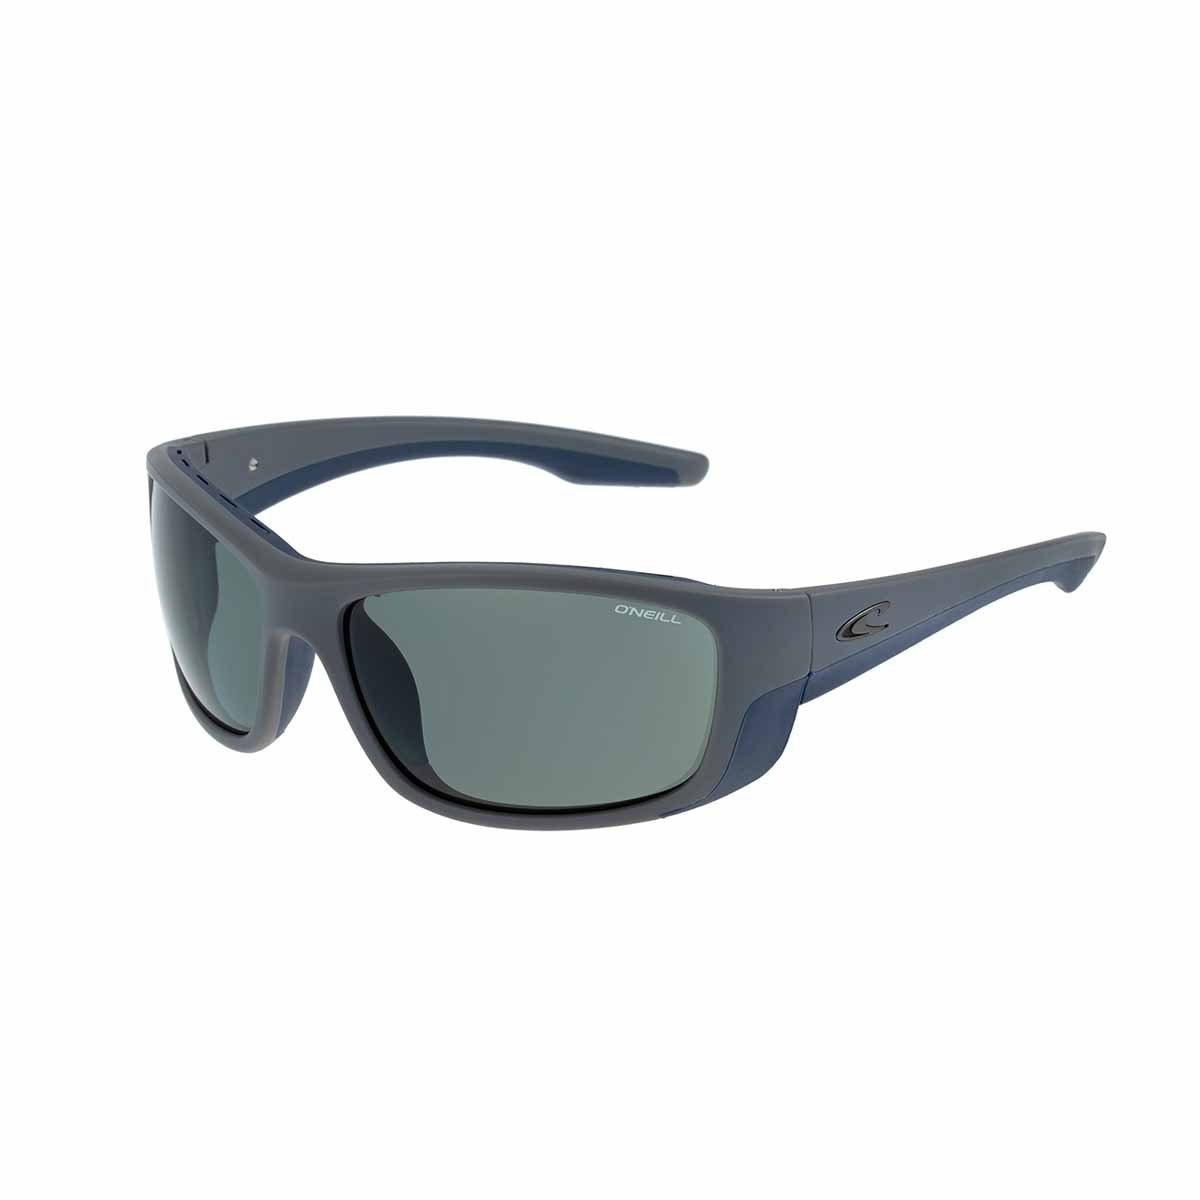 O'Neill 9017 2.0 Sunglasses – 108P Matte grey / Blue Solid smoke